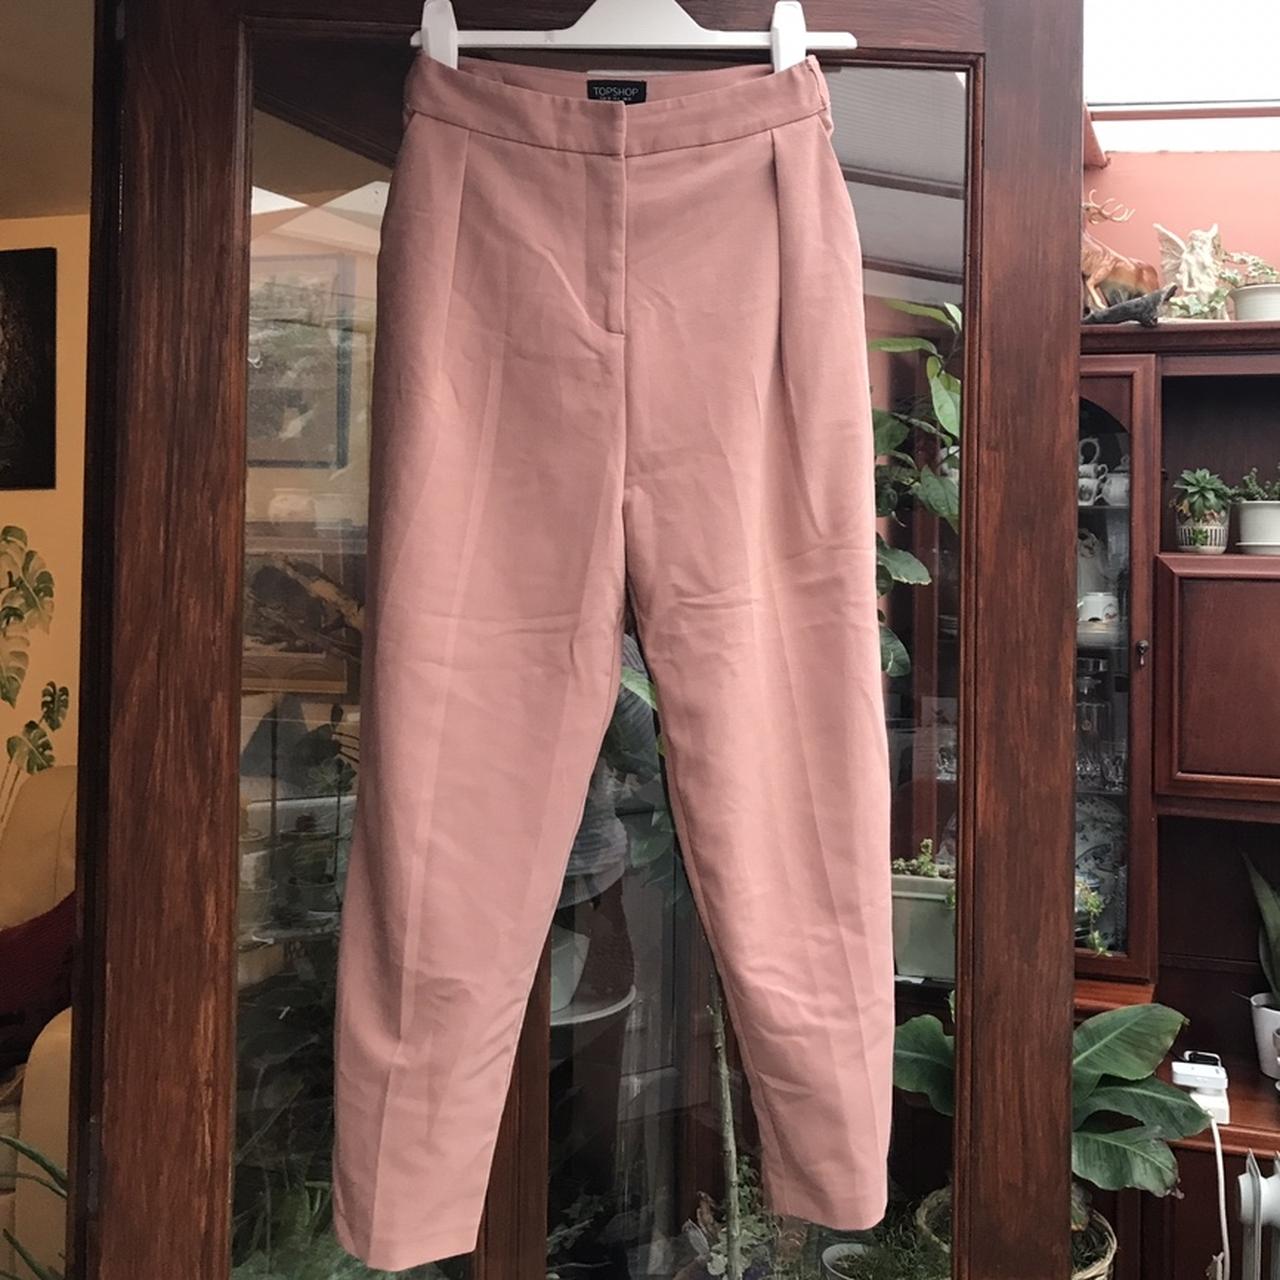 Topshop - Pink Suit Pants on Designer Wardrobe